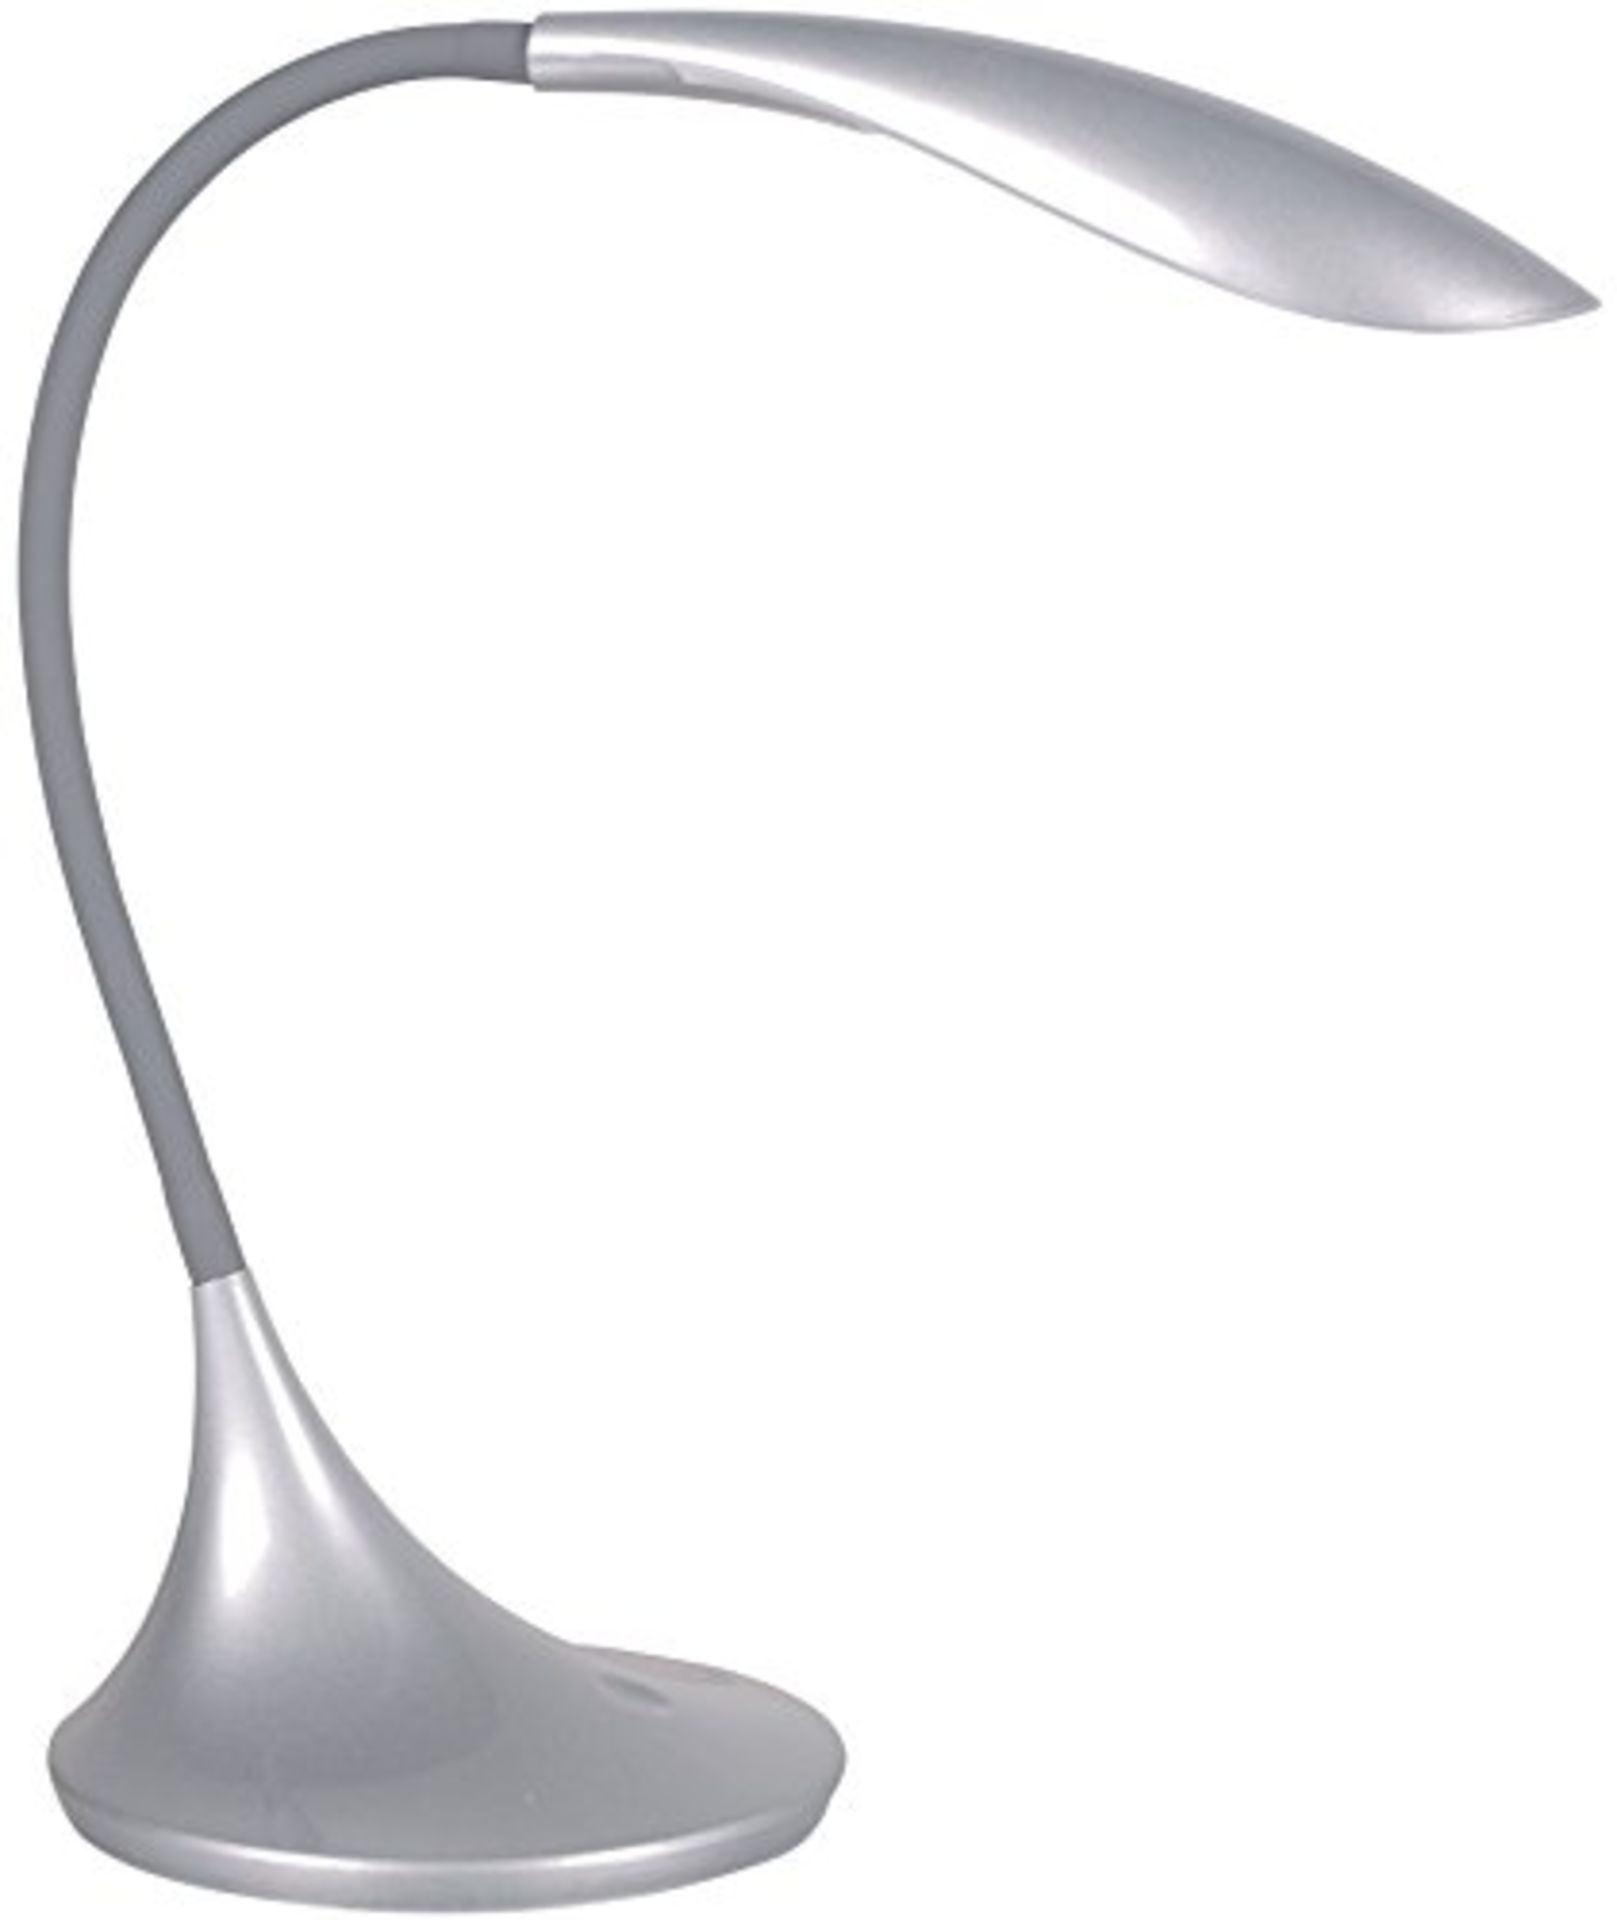 Lifemax High Vision LED Desk Light, Flicker Free Reading, Hobby Lamp, Adjustable Angle